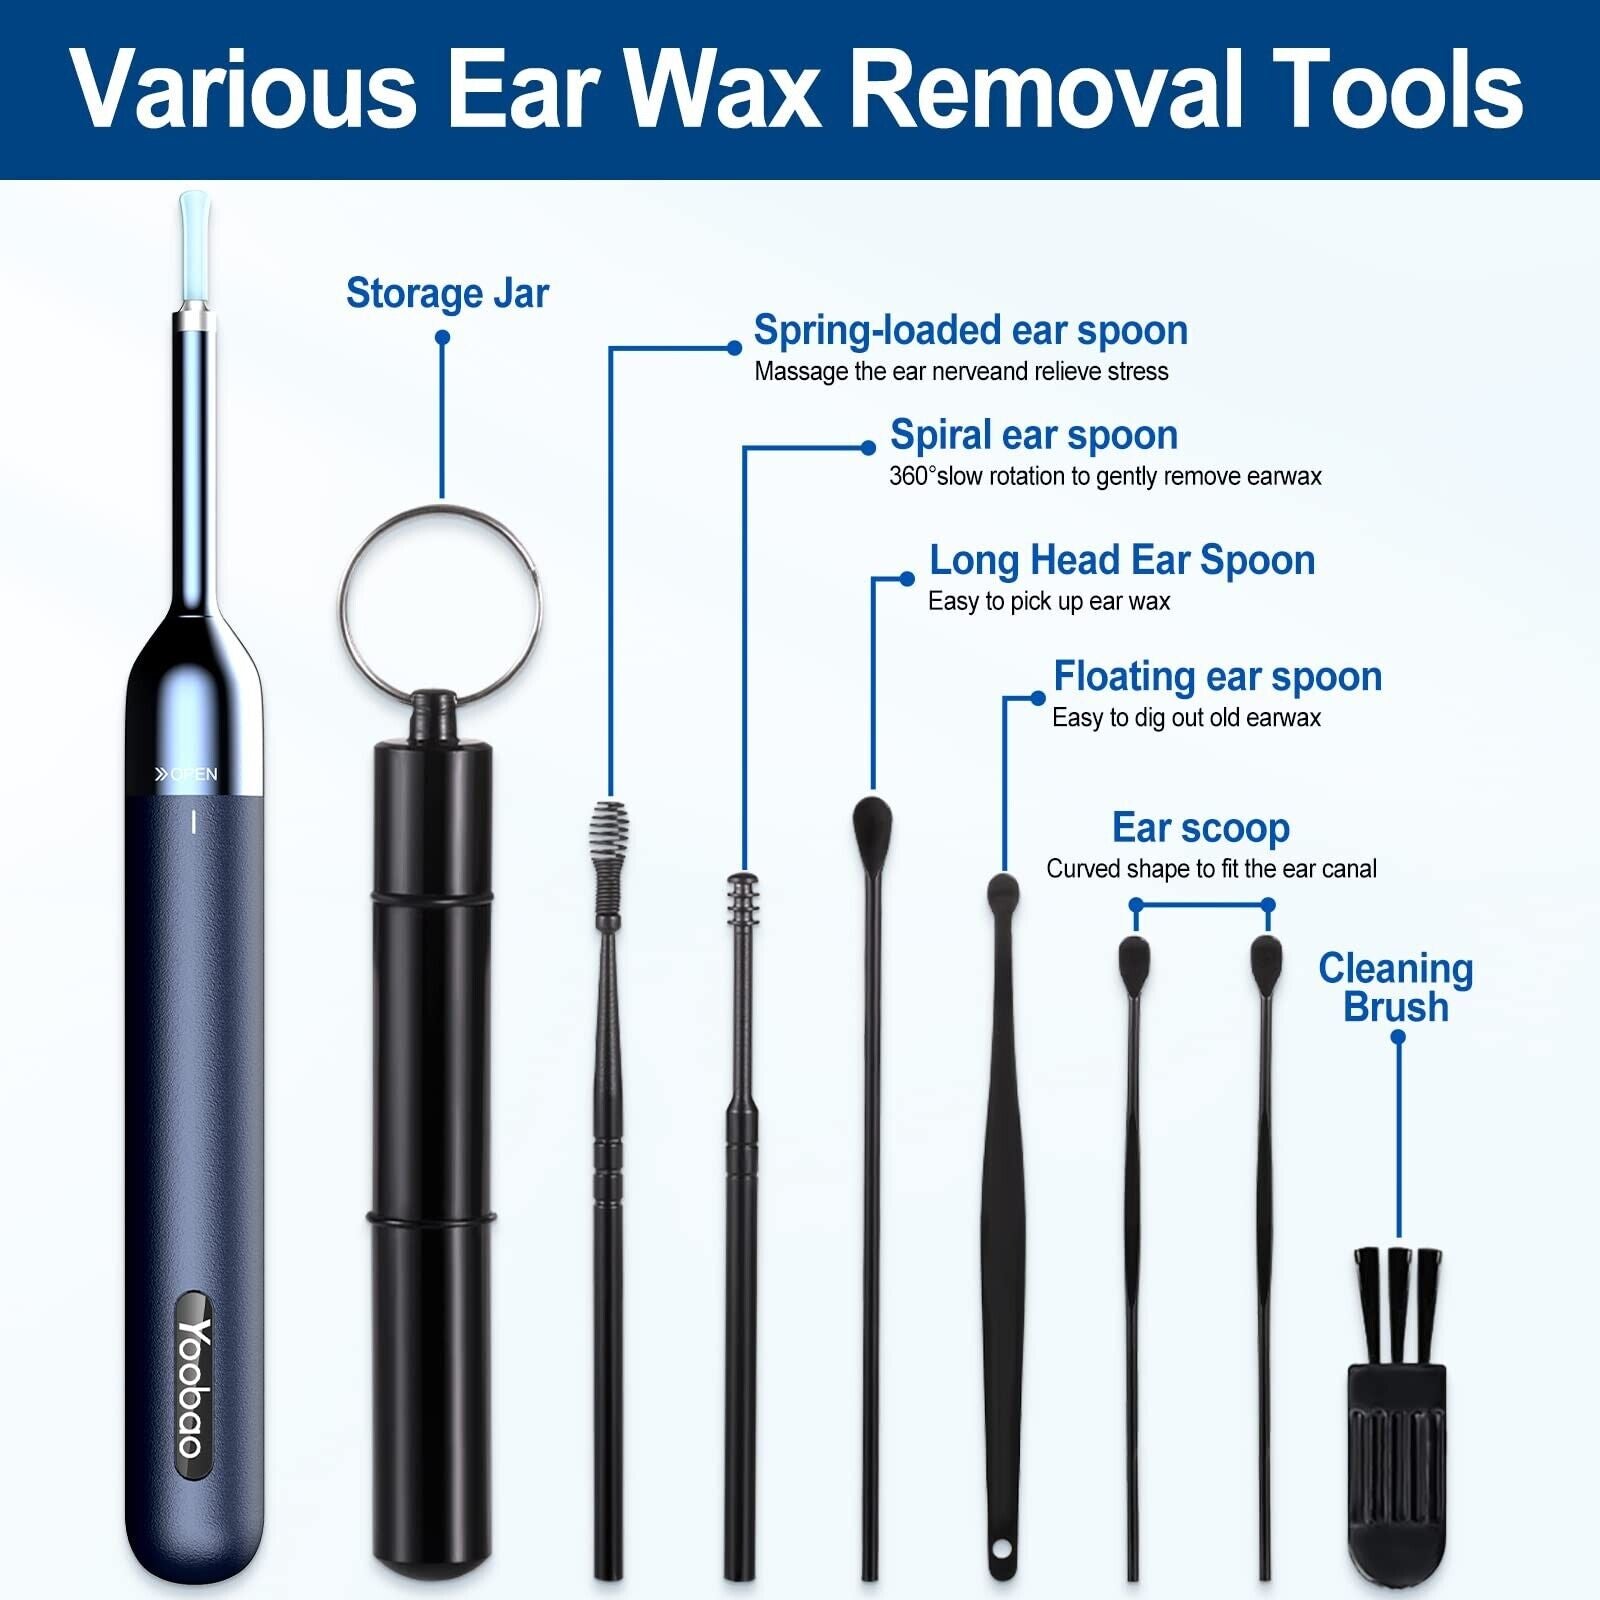 Ear Wax Removal Tool